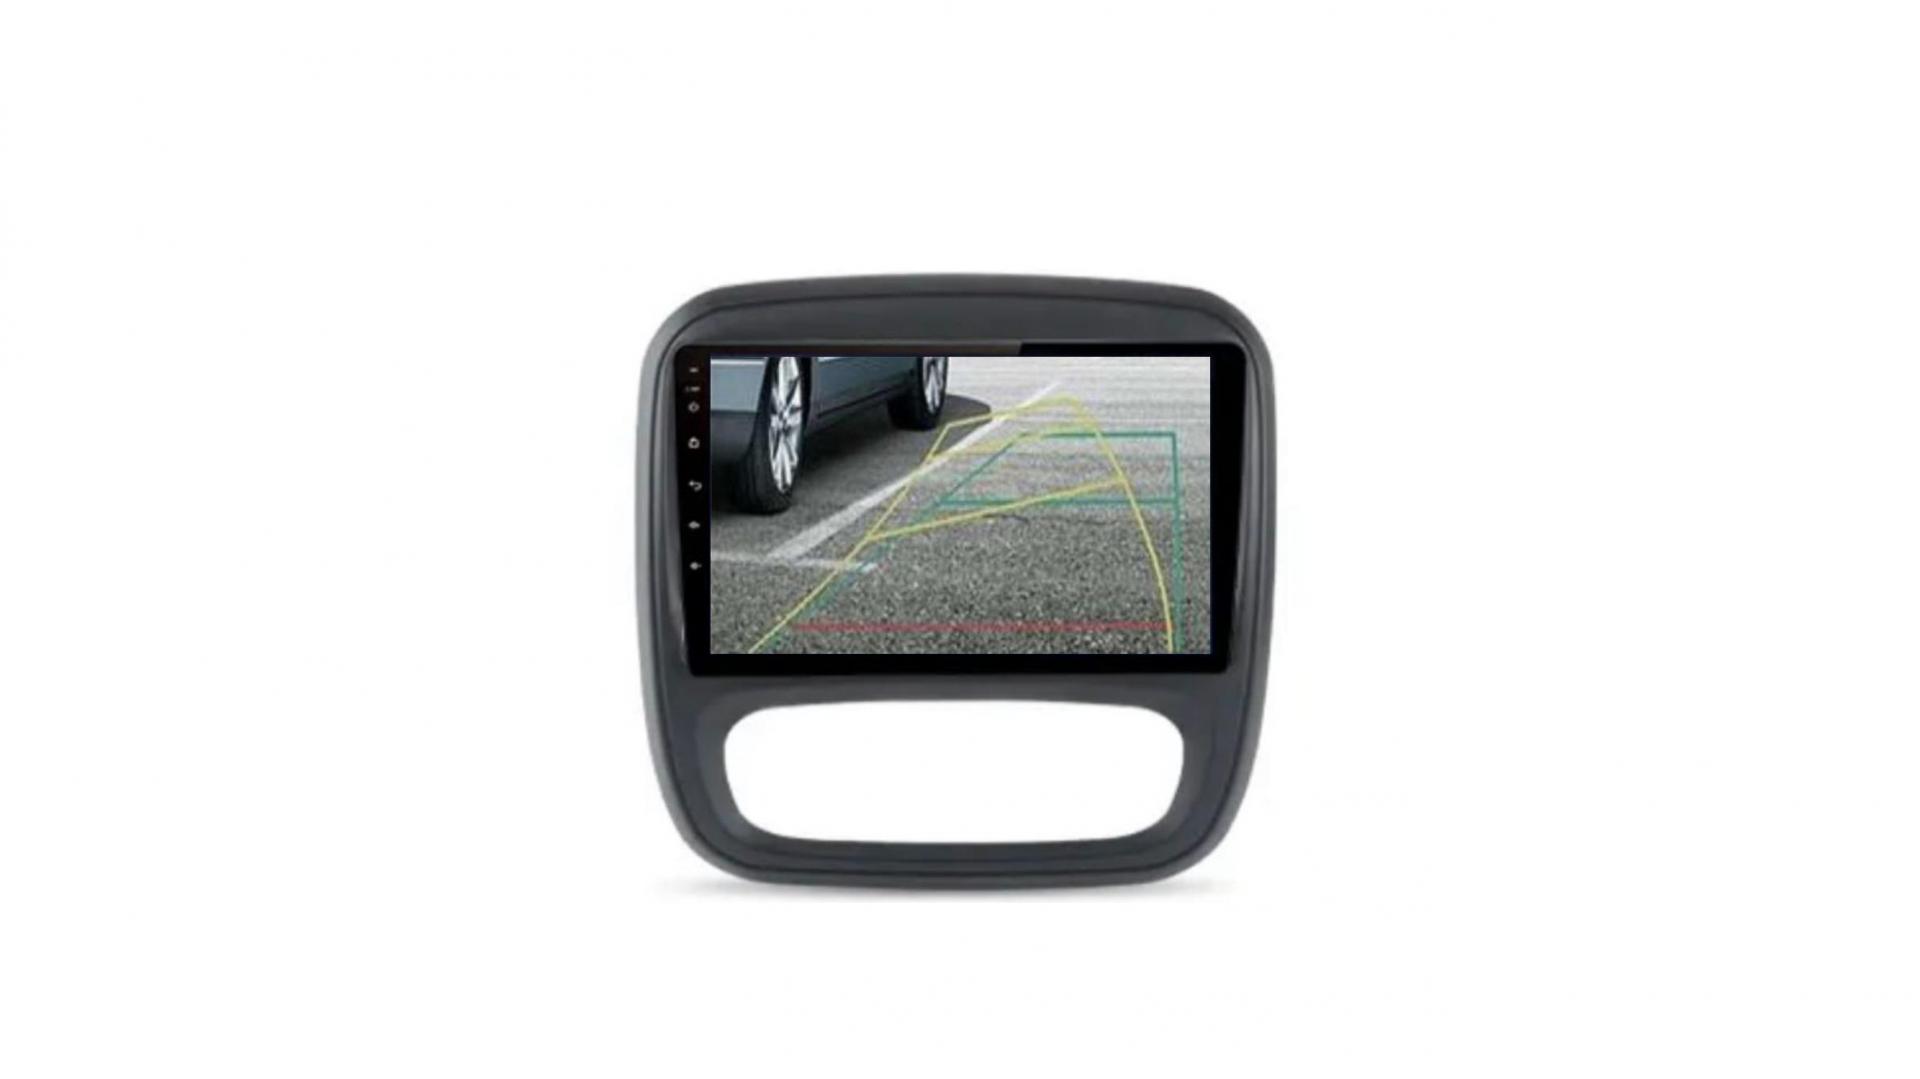 Autoradio GPS Caméra Recul trafic 3 - Équipement auto